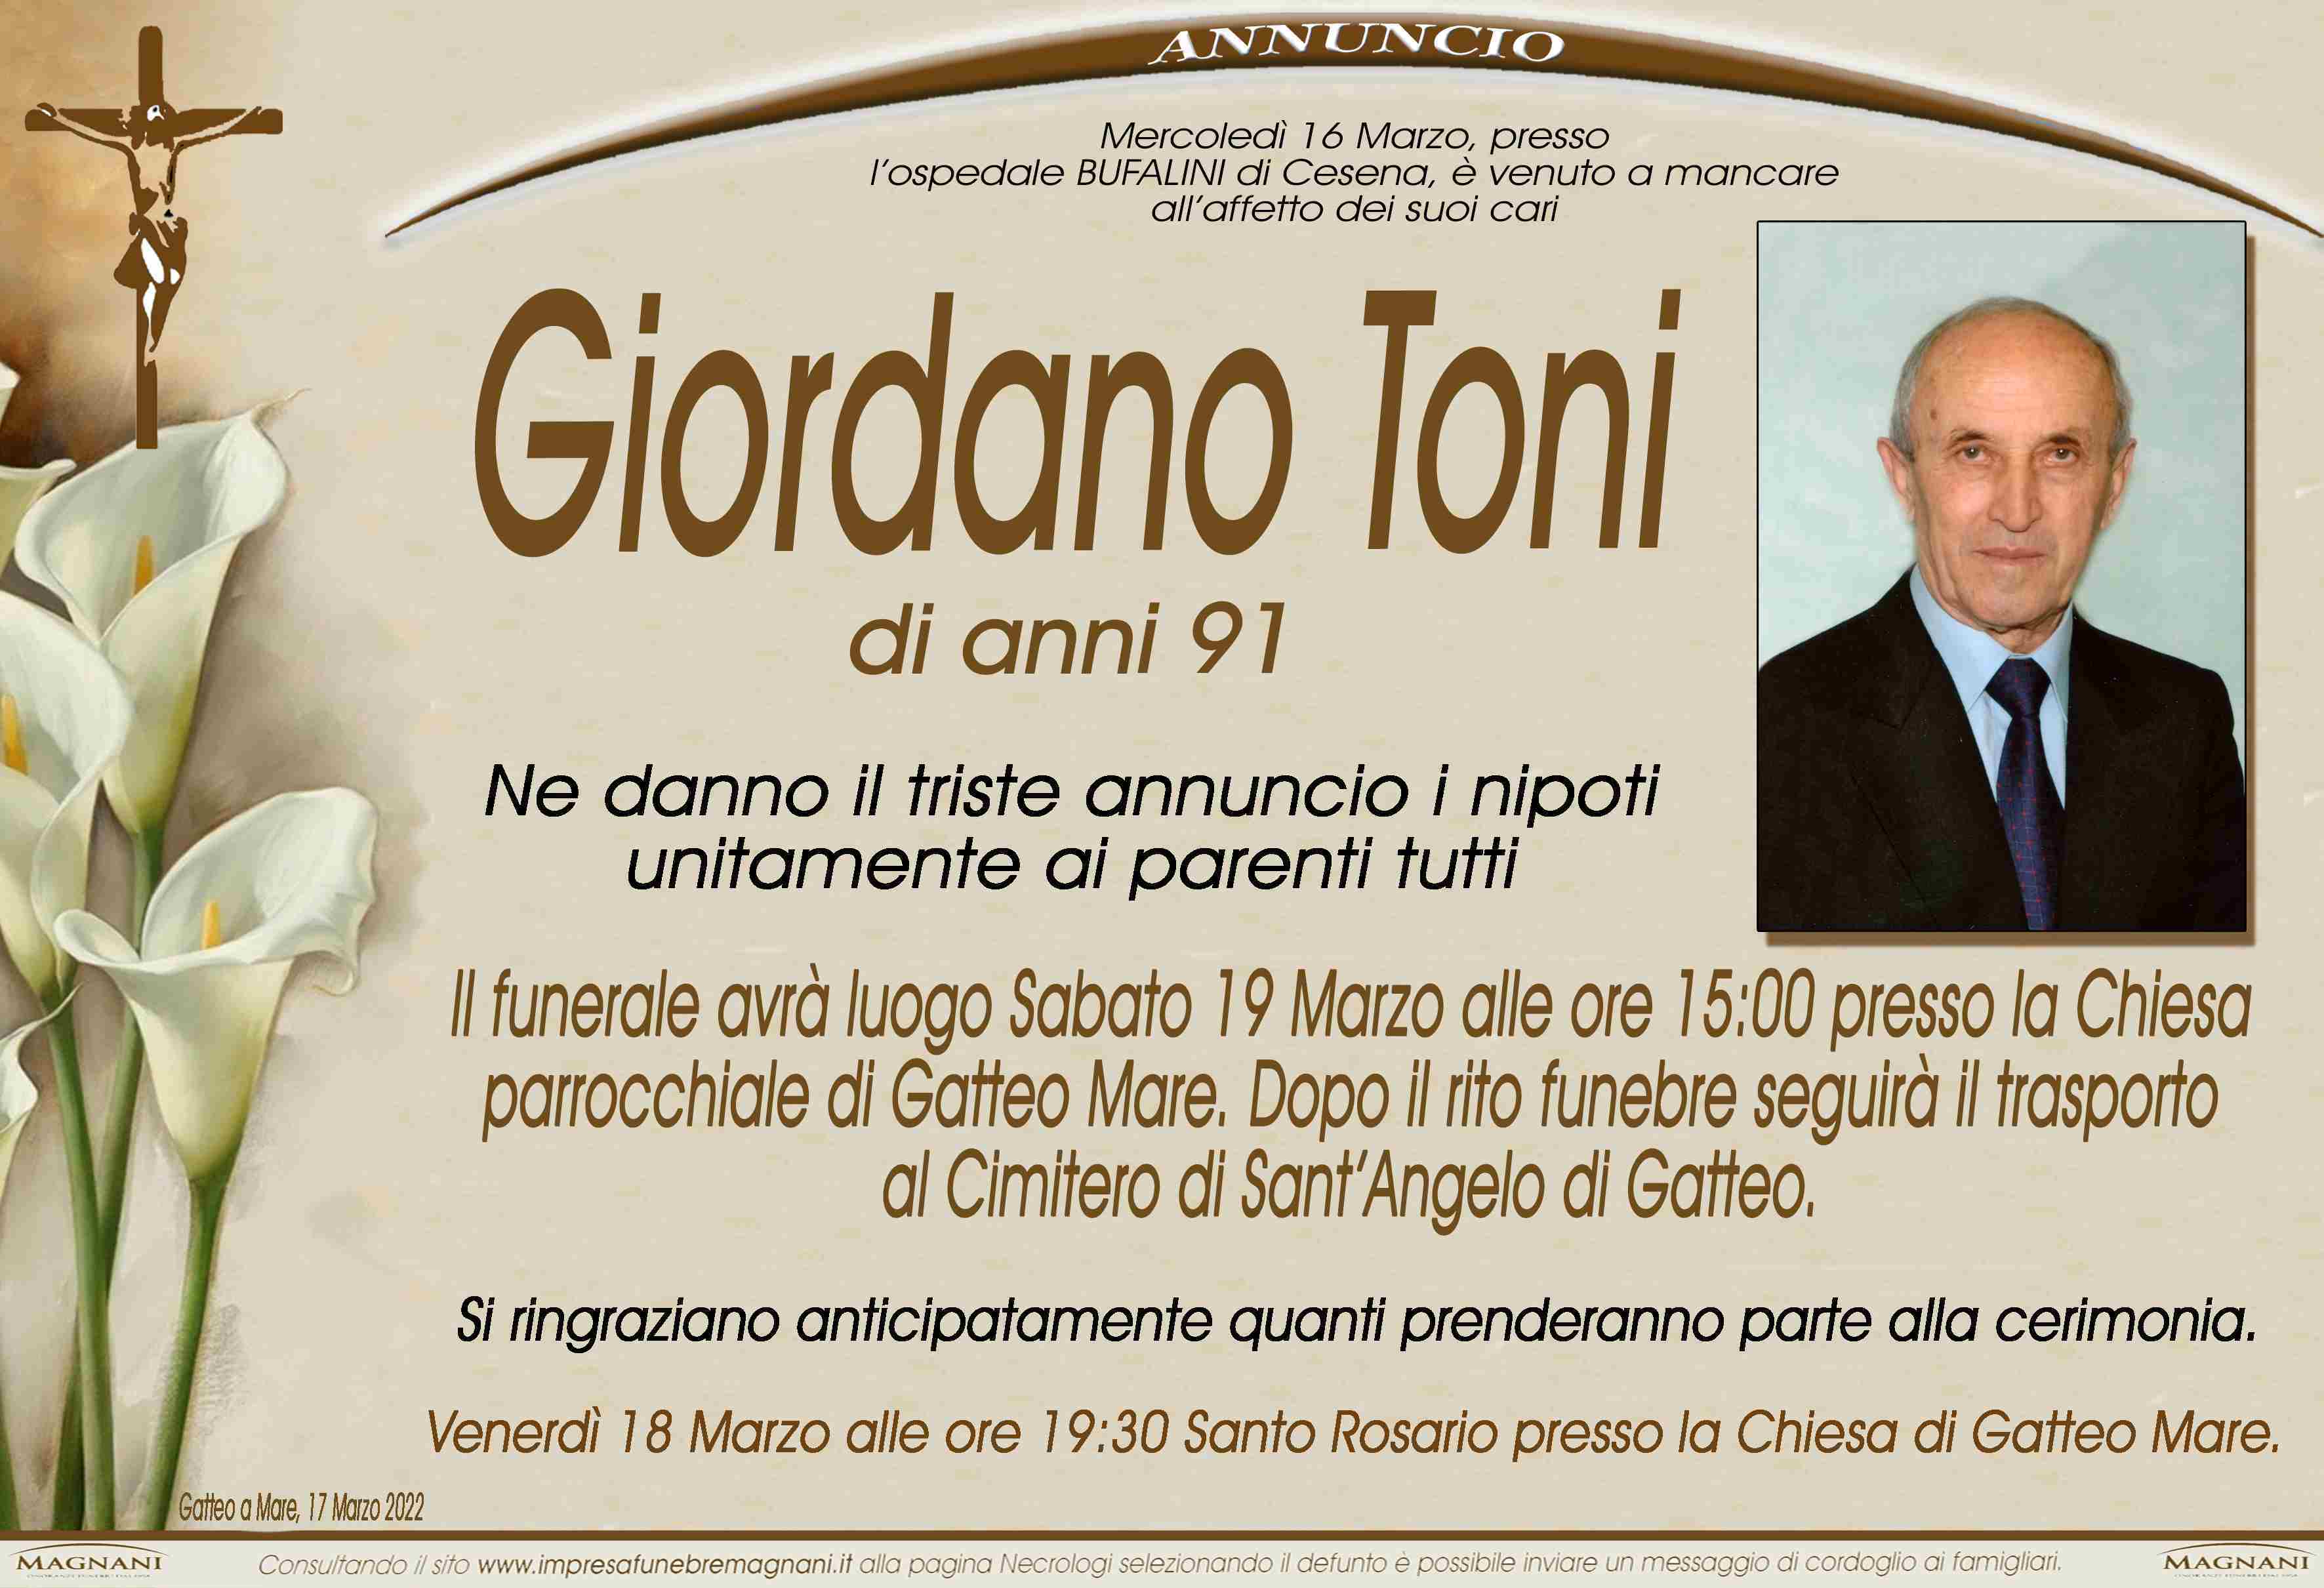 Giordano Toni